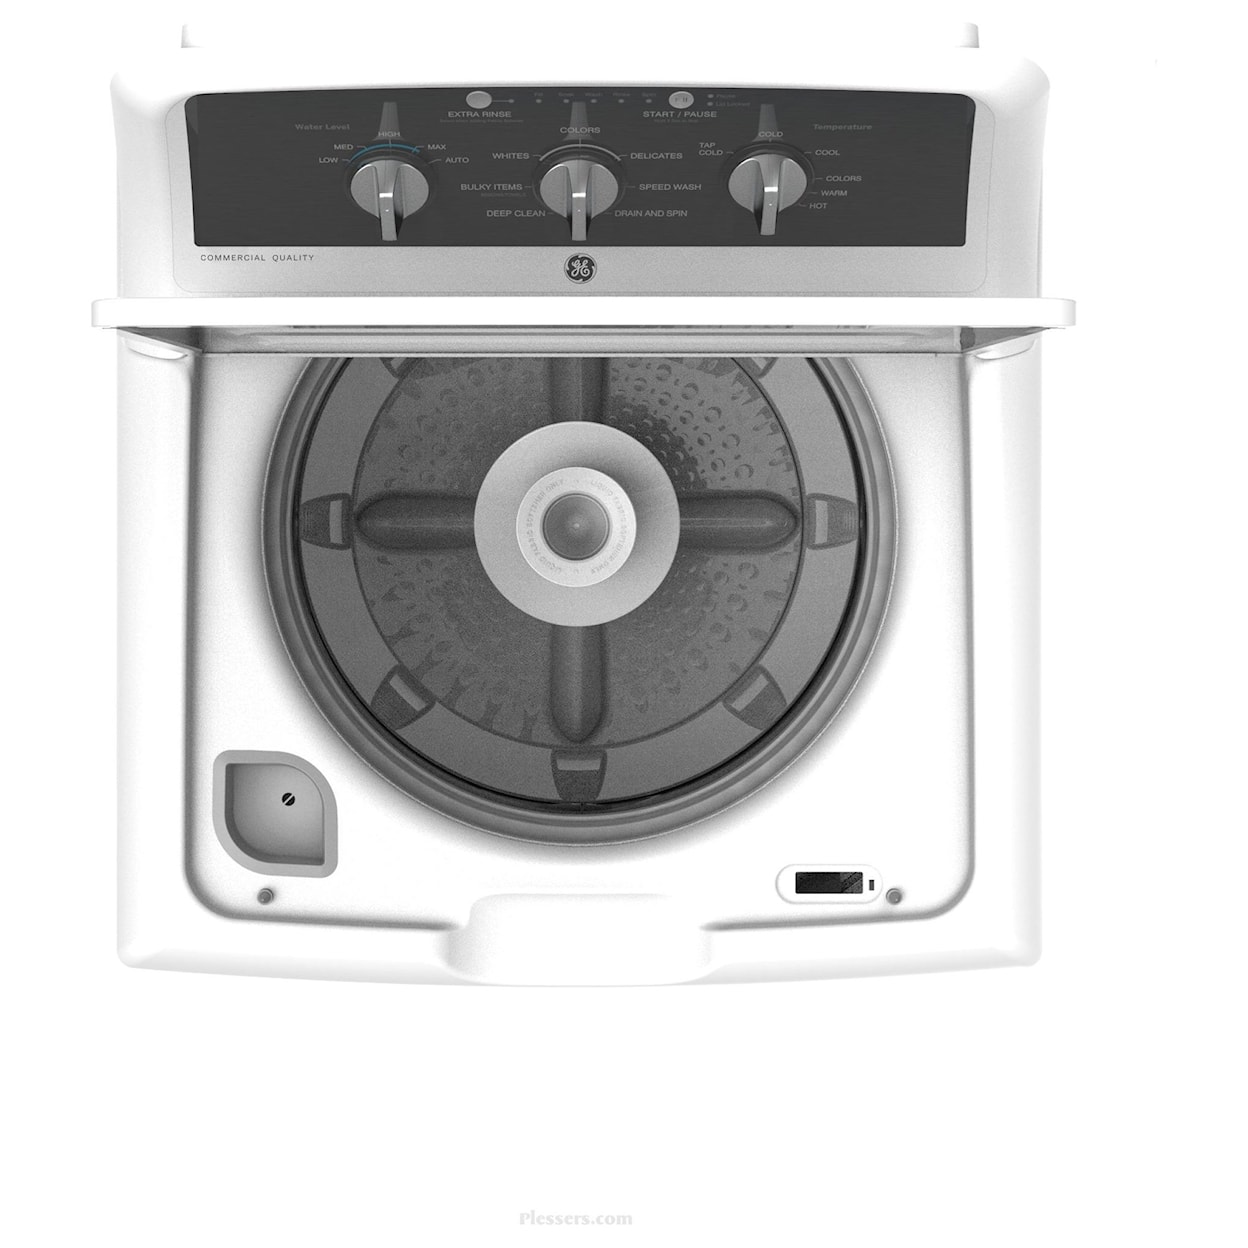 GE Appliances Washers - GE 4.2 Cu. Ft. Capacity Washer